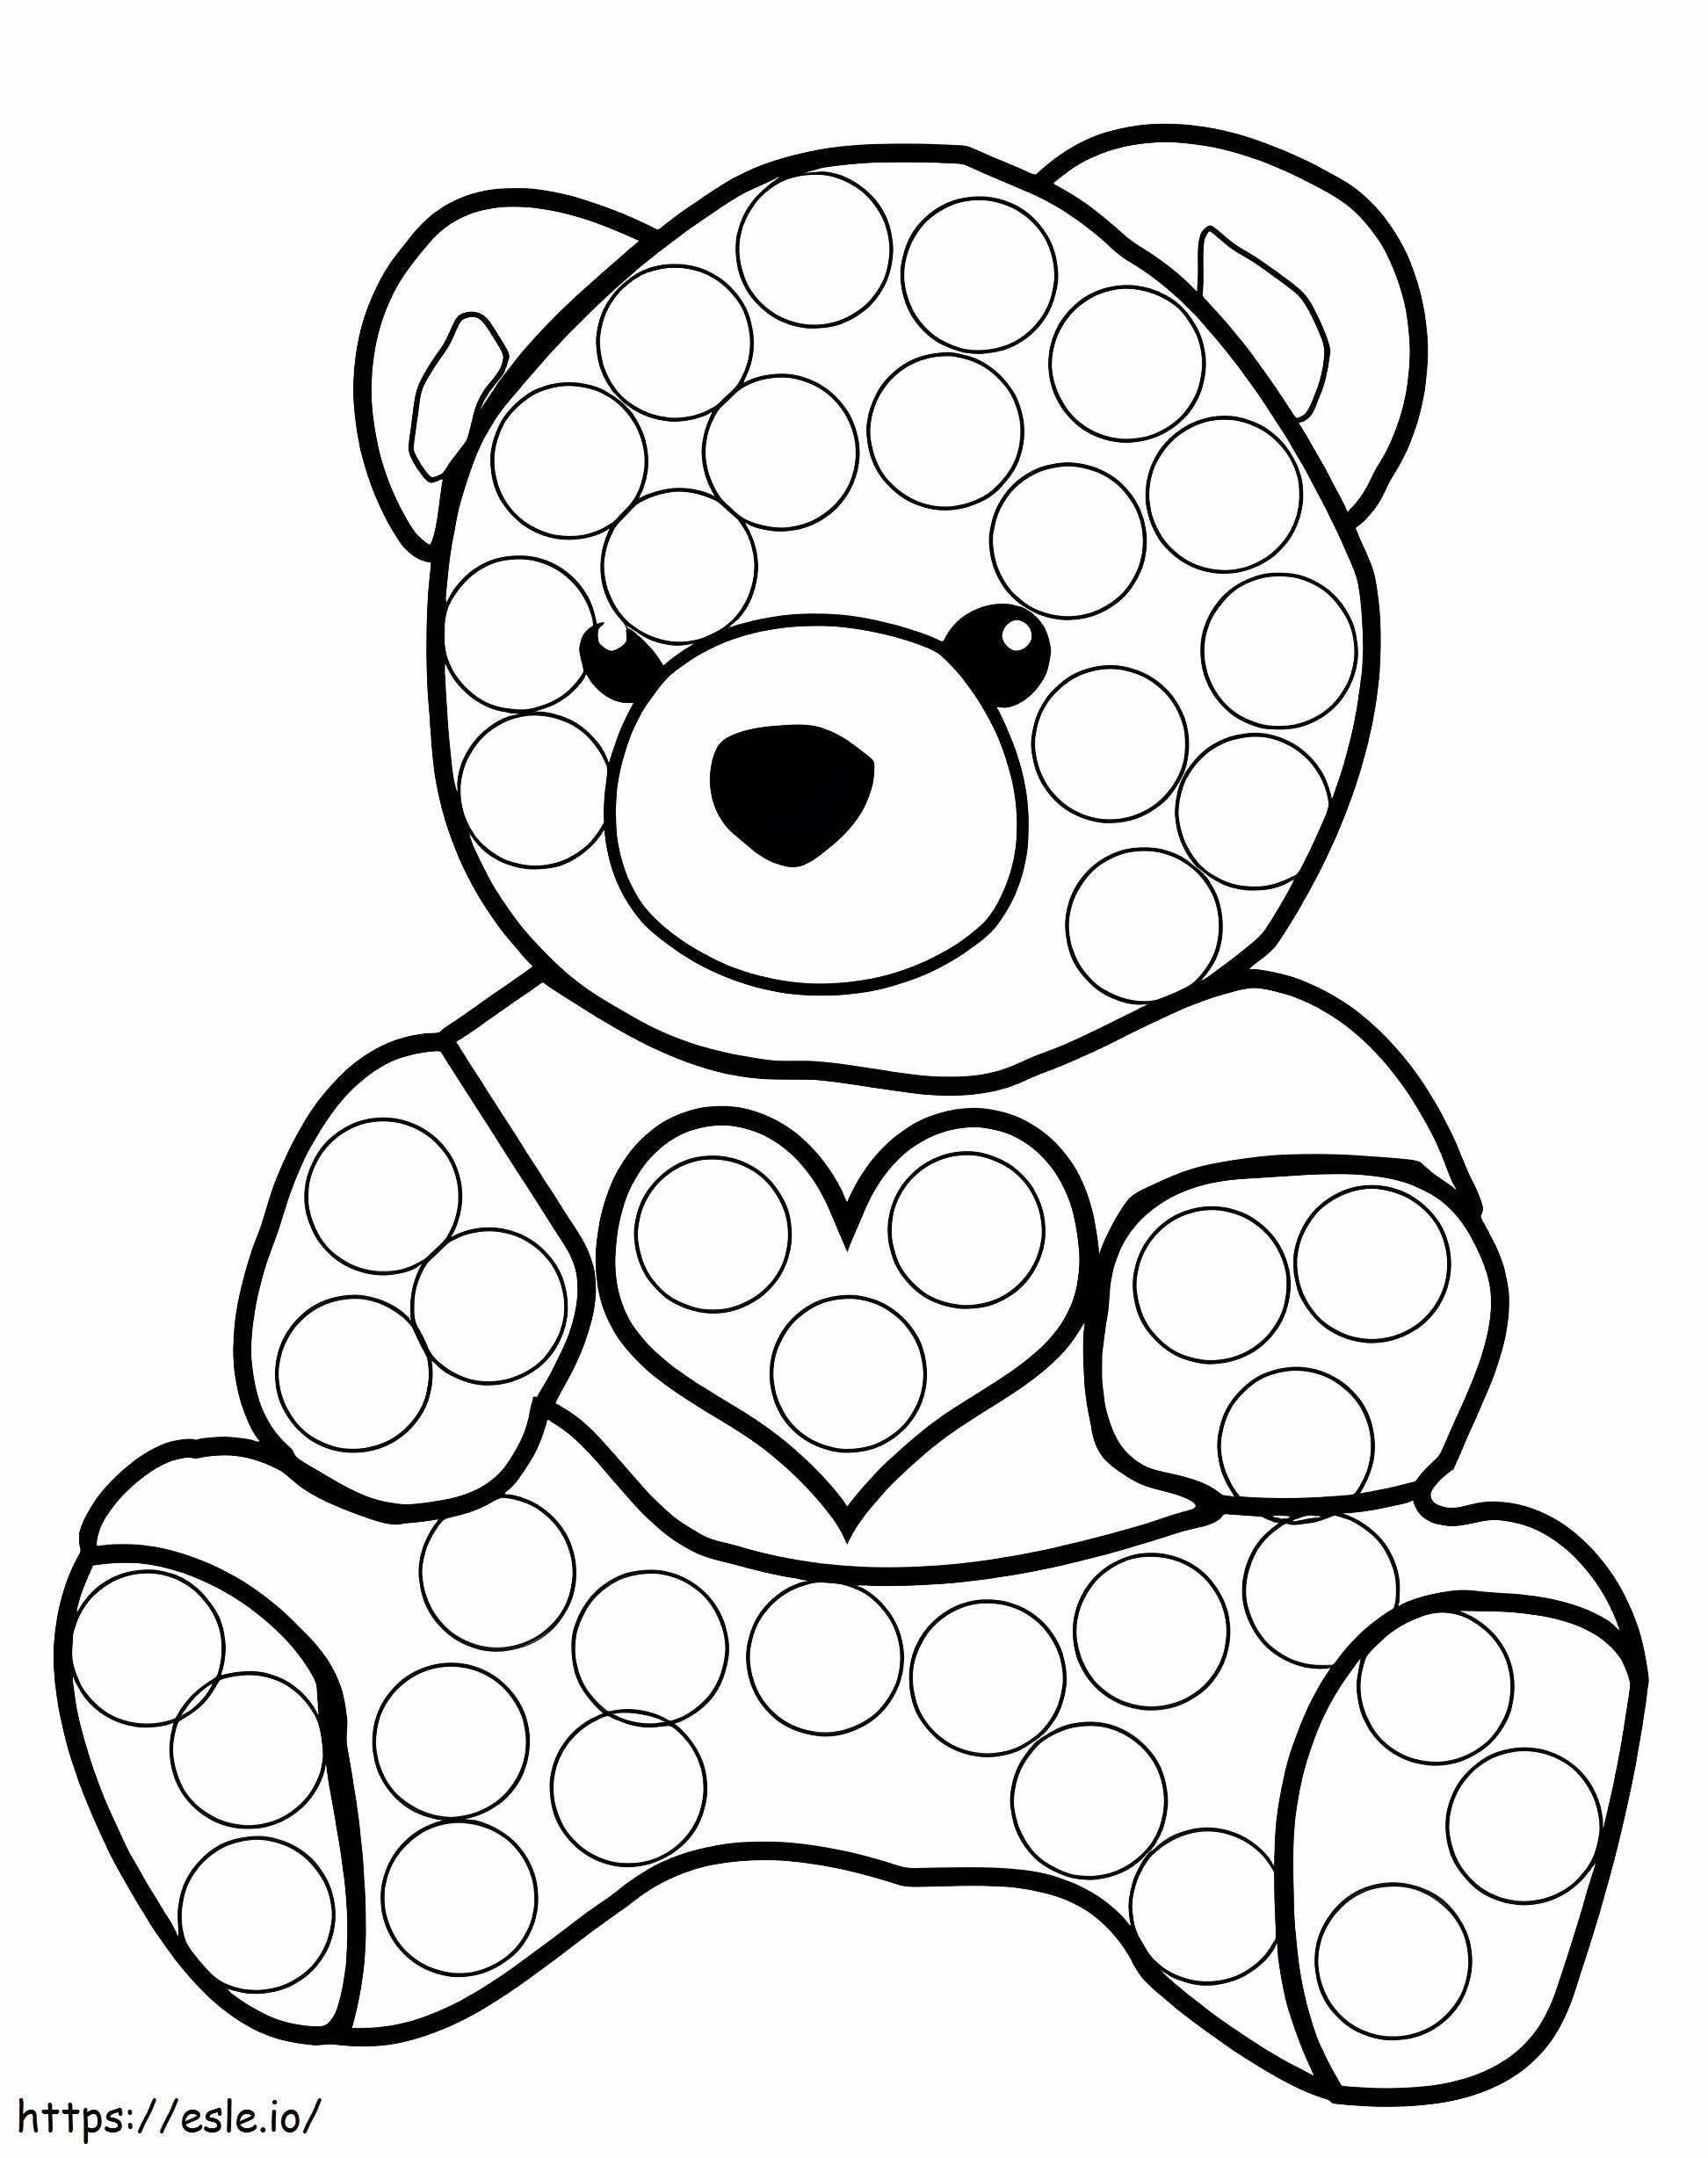 Teddybär-Punktmarker ausmalbilder